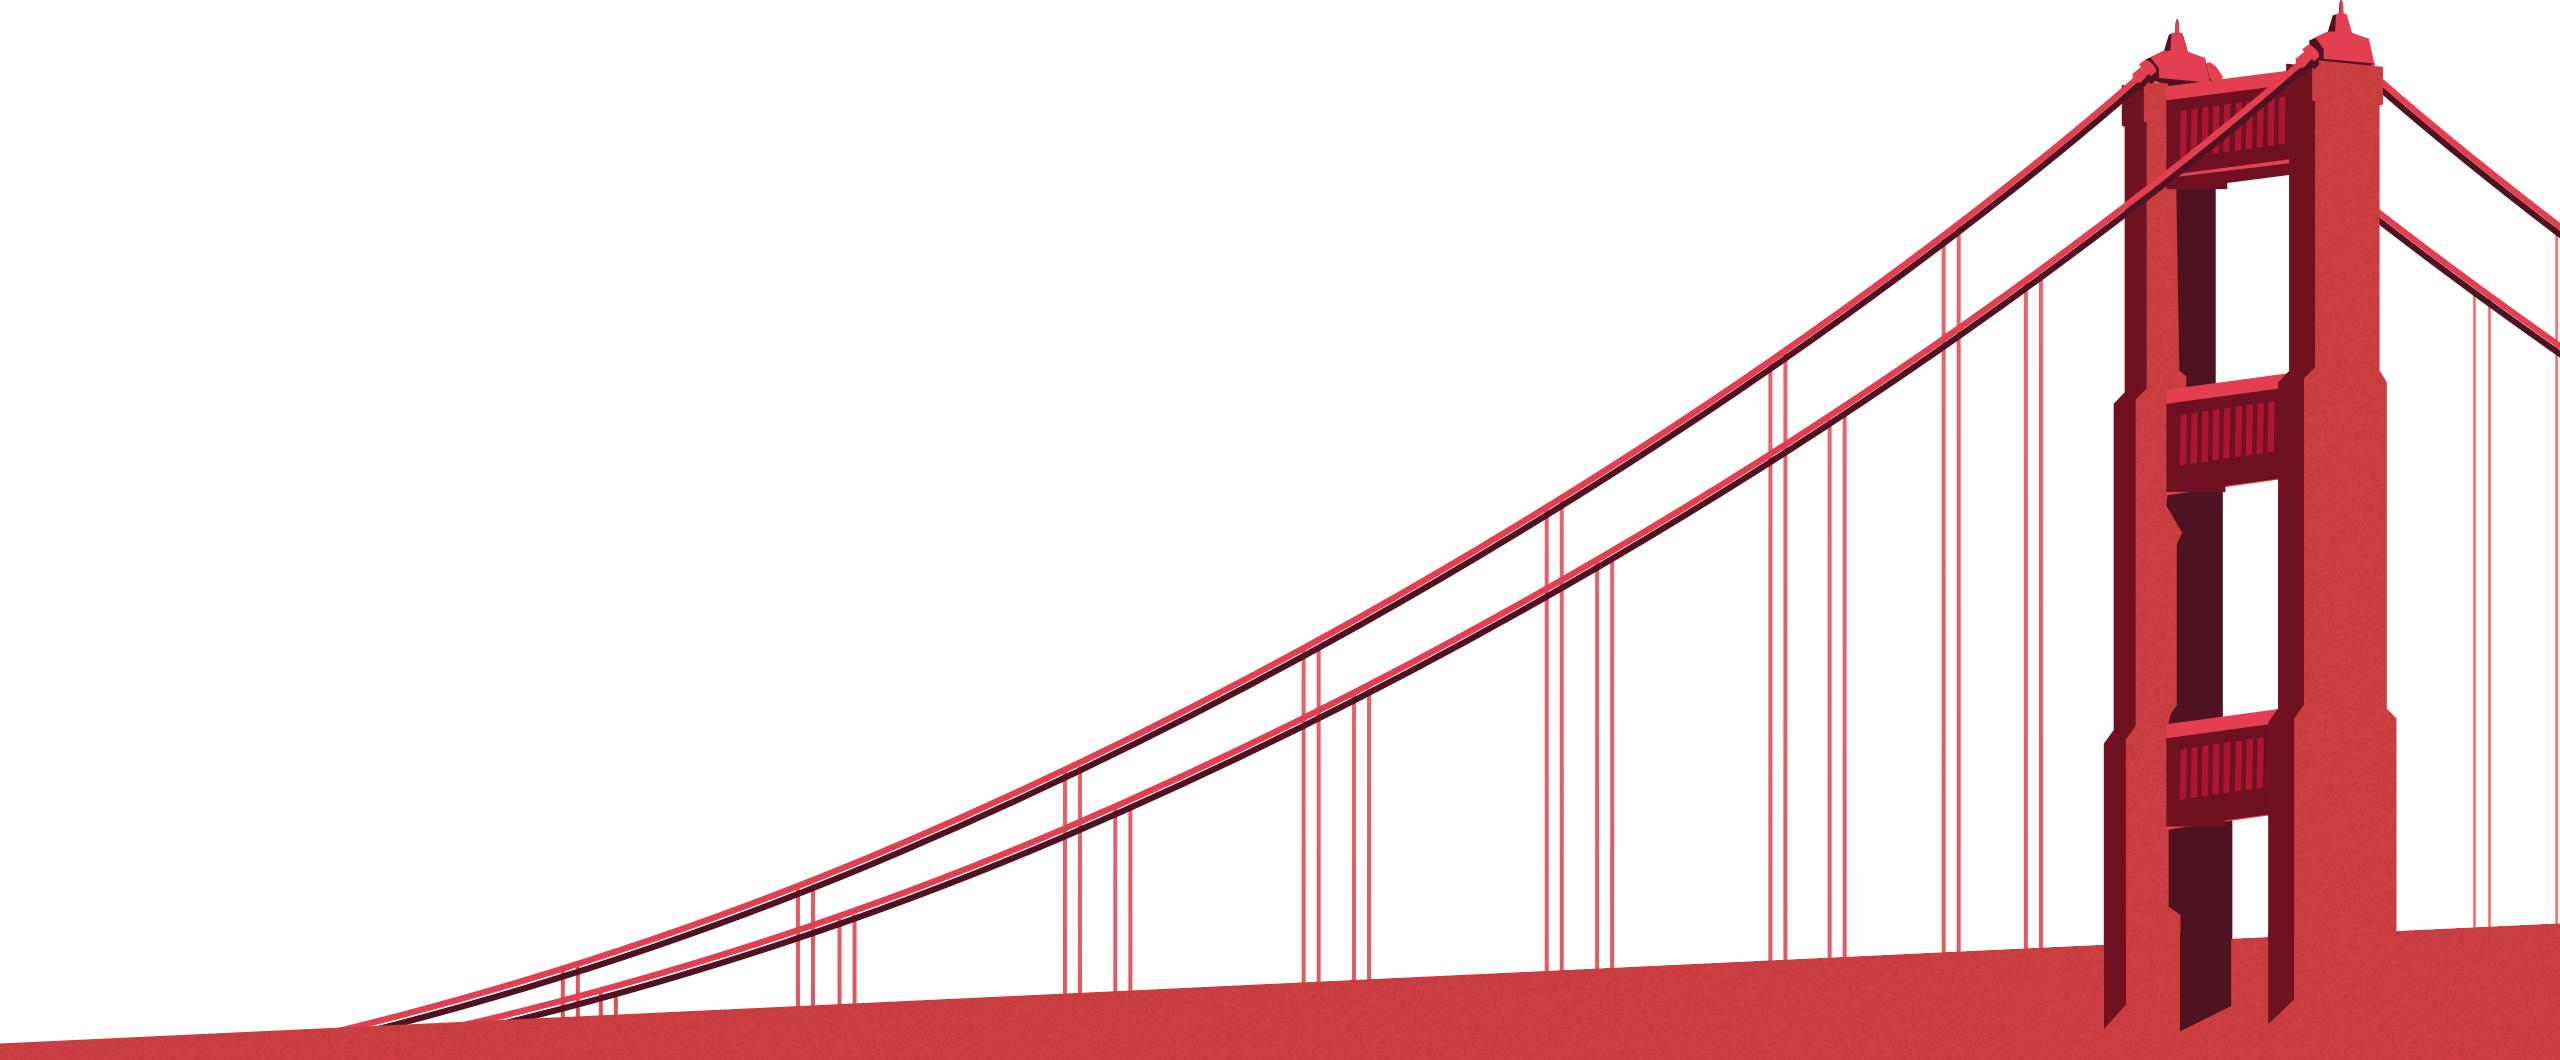 A Red Railing On A Bridge